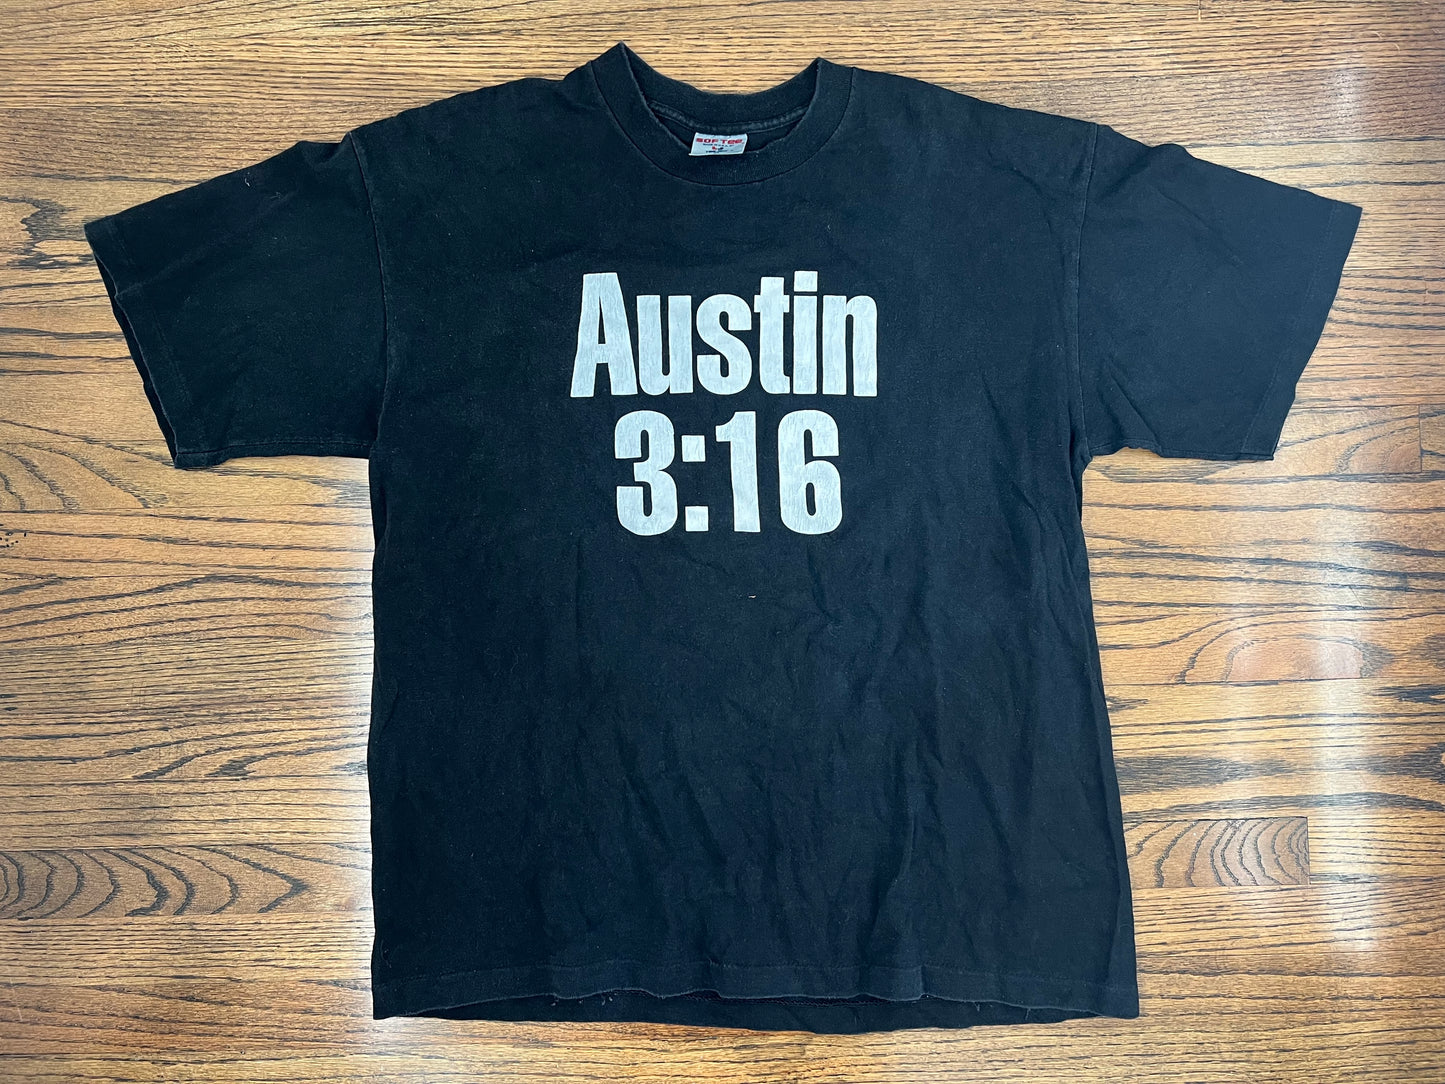 1997 WWF “Stone Cold” Steve Austin Smoking Skull “Austin 3:16” shirt